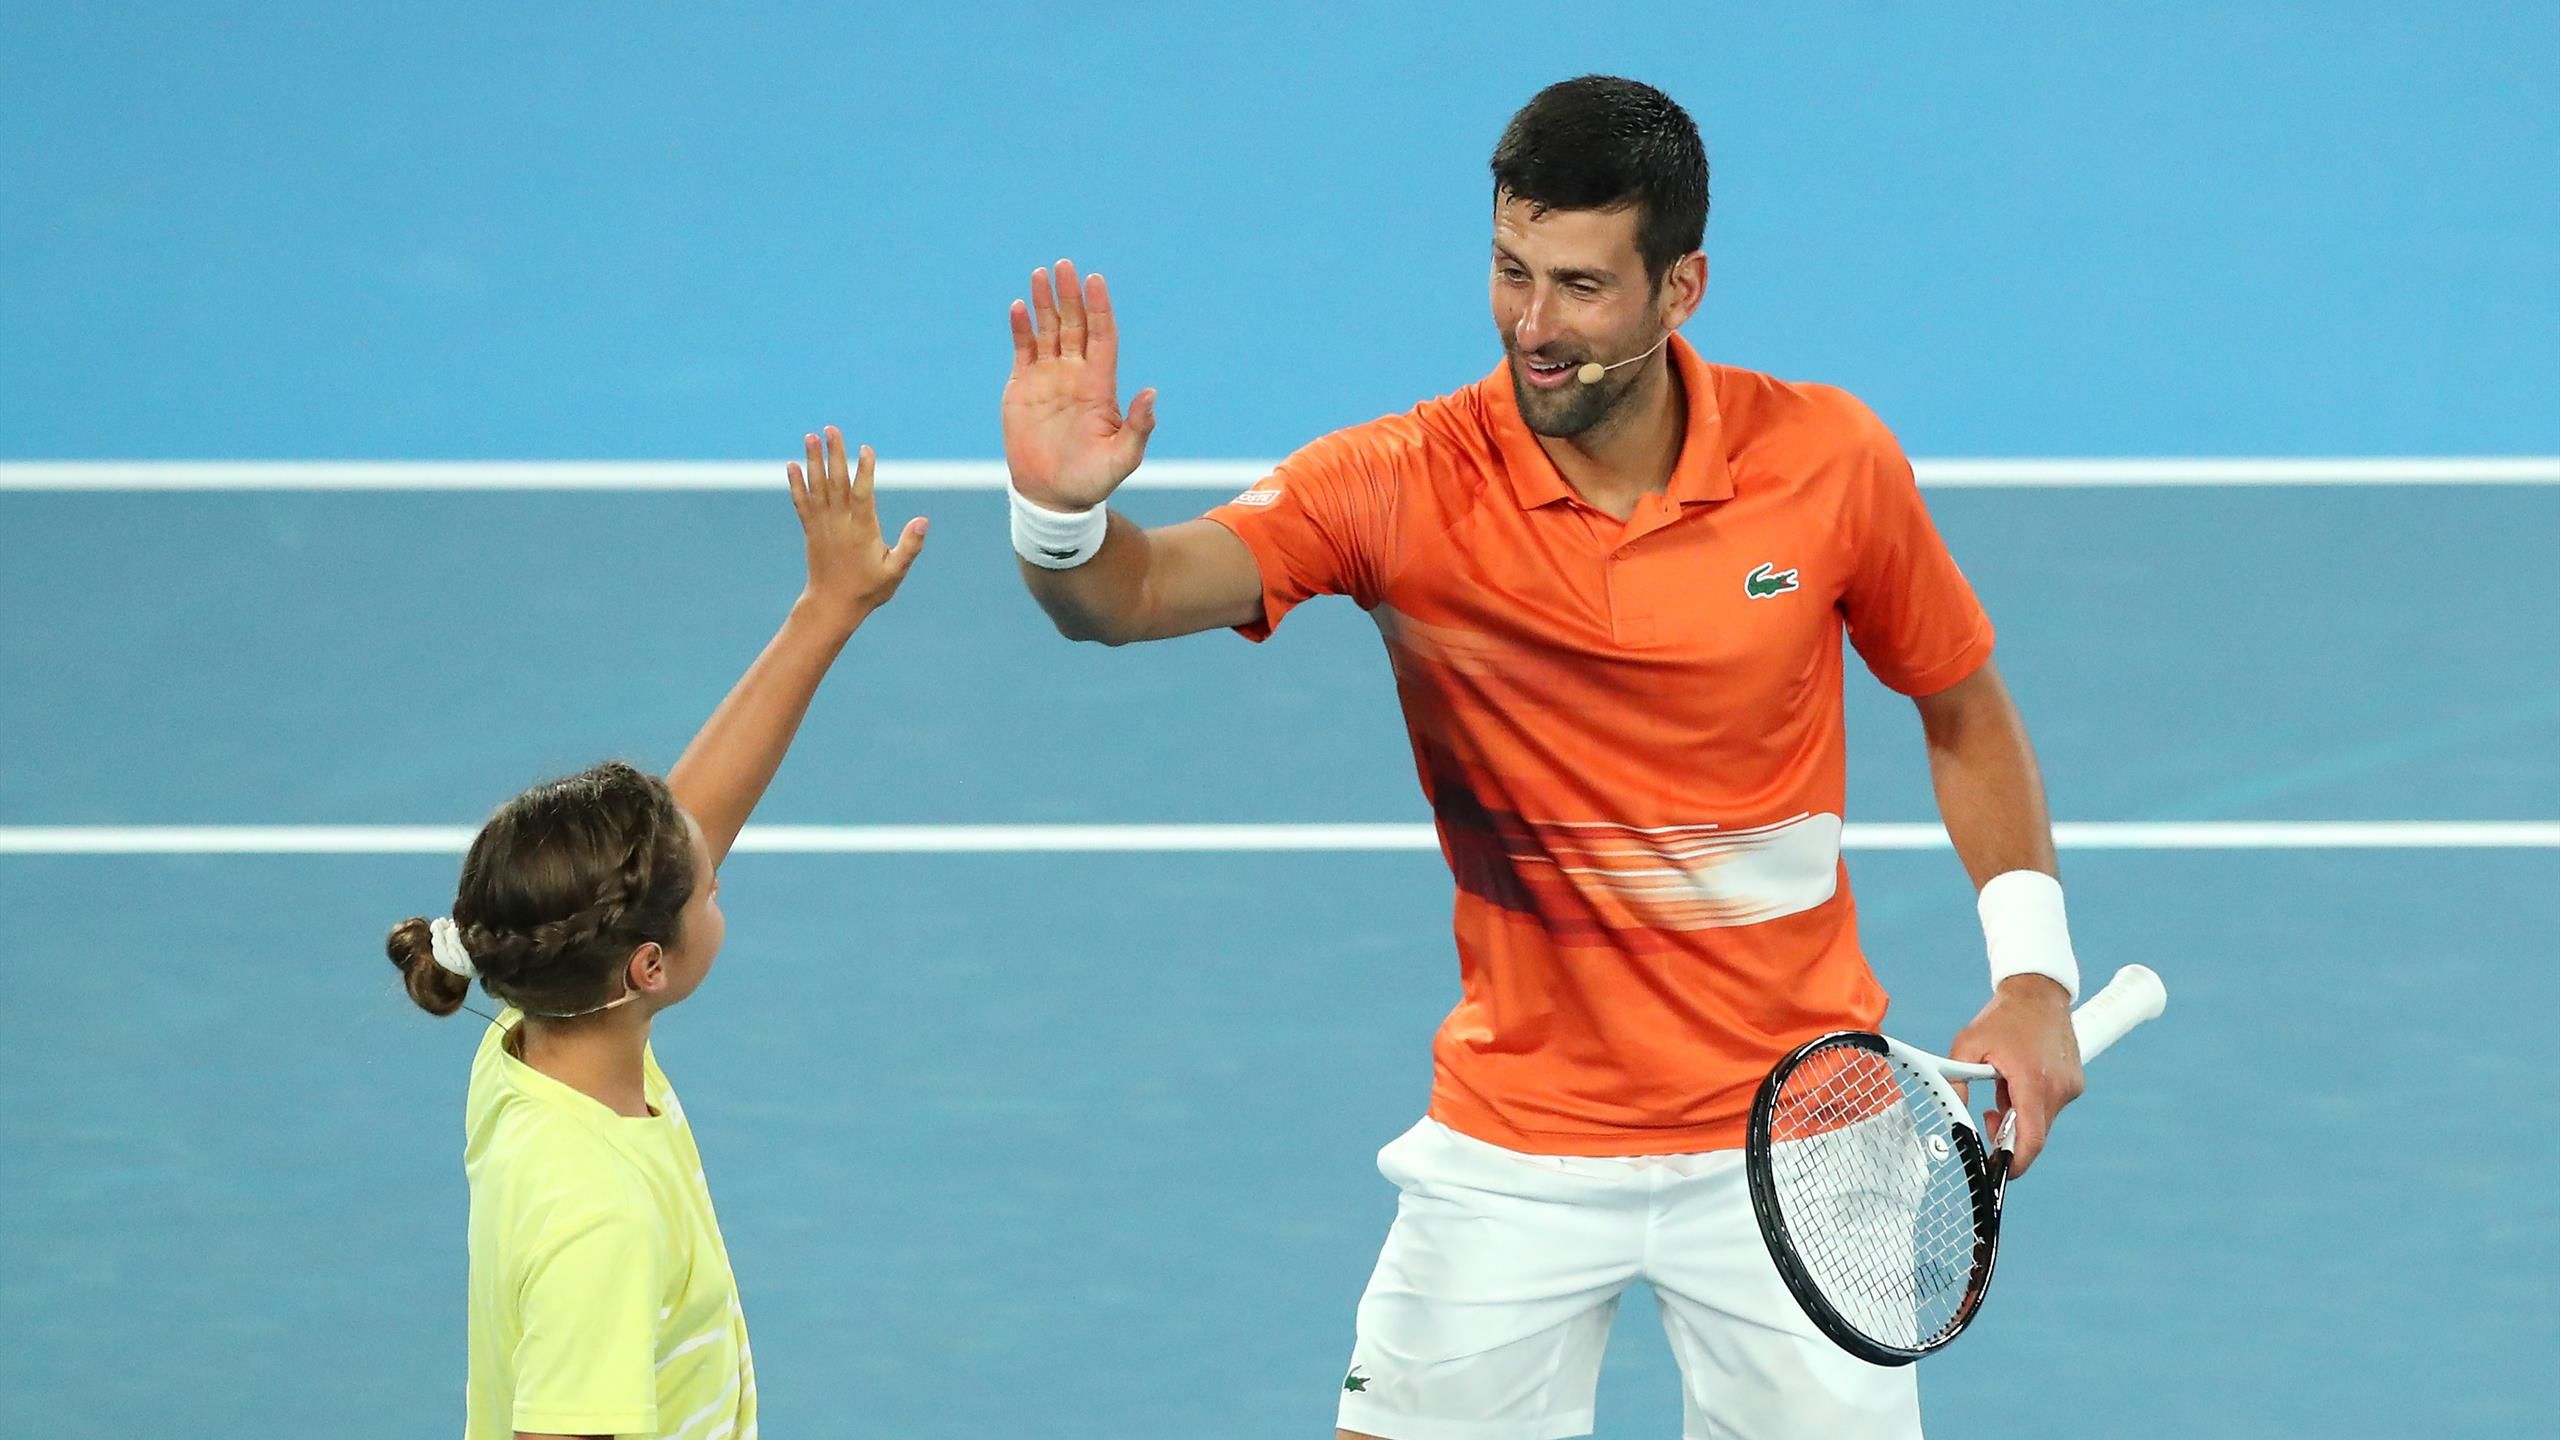 Novak Djokovic seemingly pain free in entertaining exhibition match against Nick Kyrgios ahead of the Australian Open